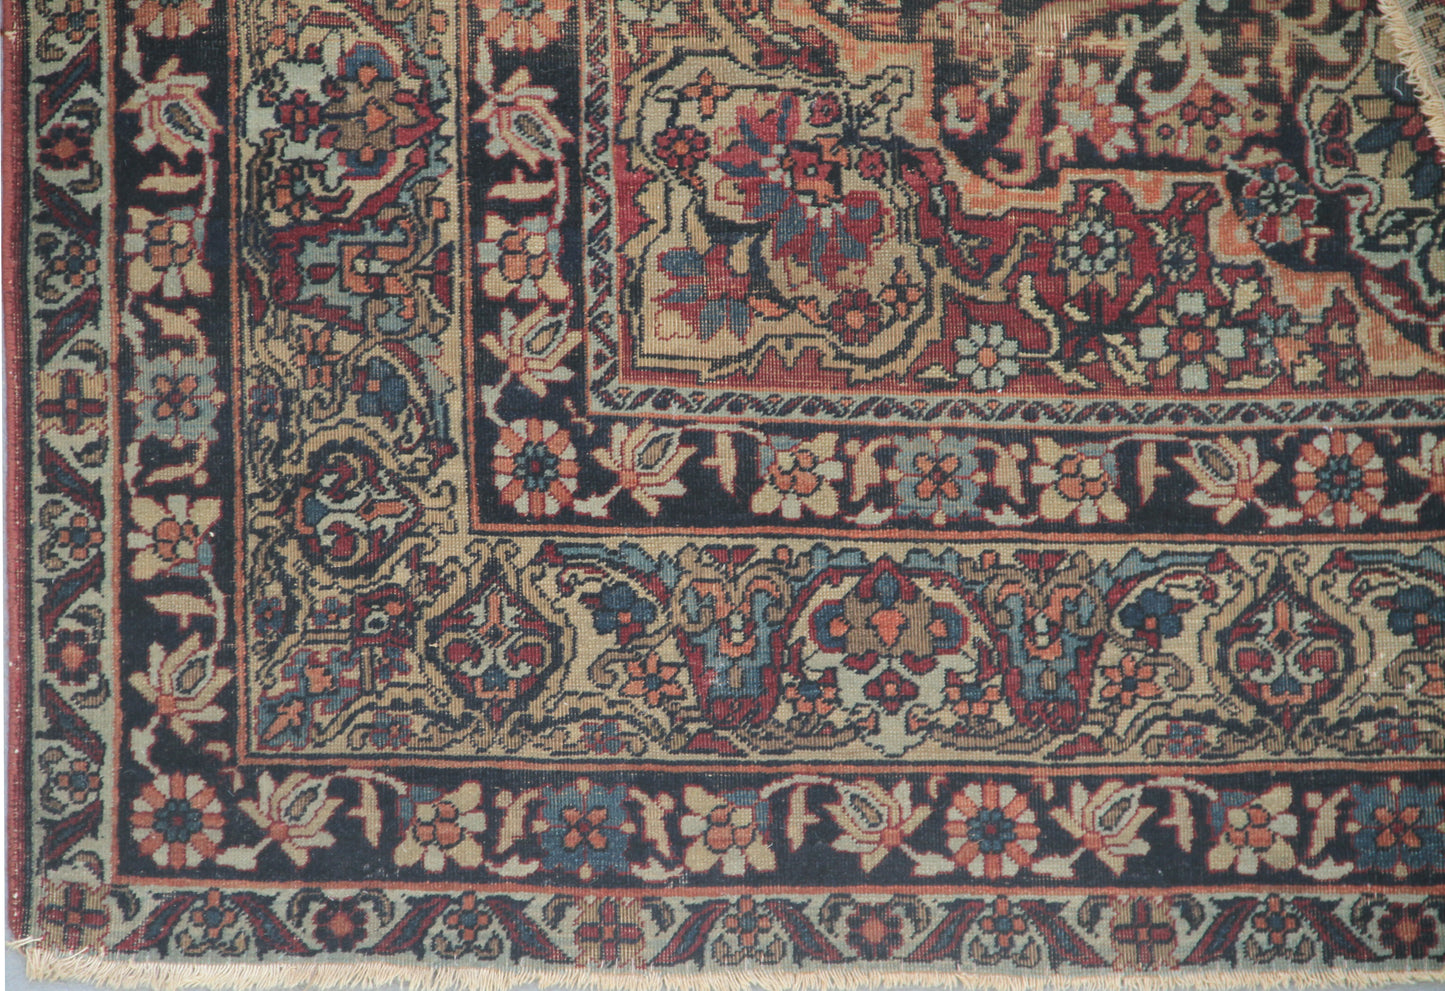 4'x6' Antique Persian Kermanshah Rug